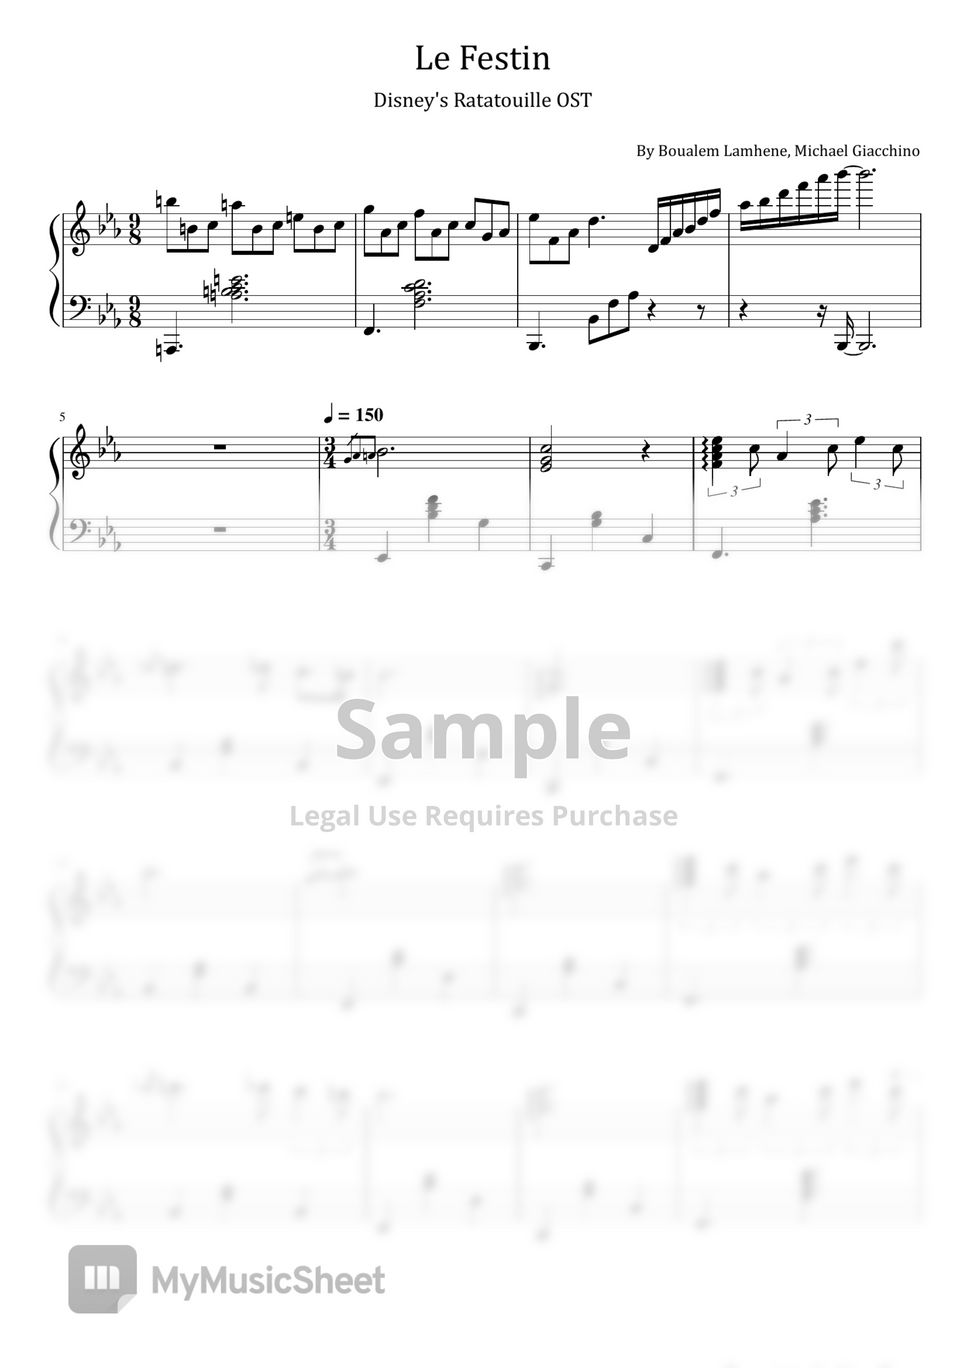 Boualem Lamhene, Michael Giacchino - Le Festin (Disney's Ratatouille OST - For Piano Solo) by poon